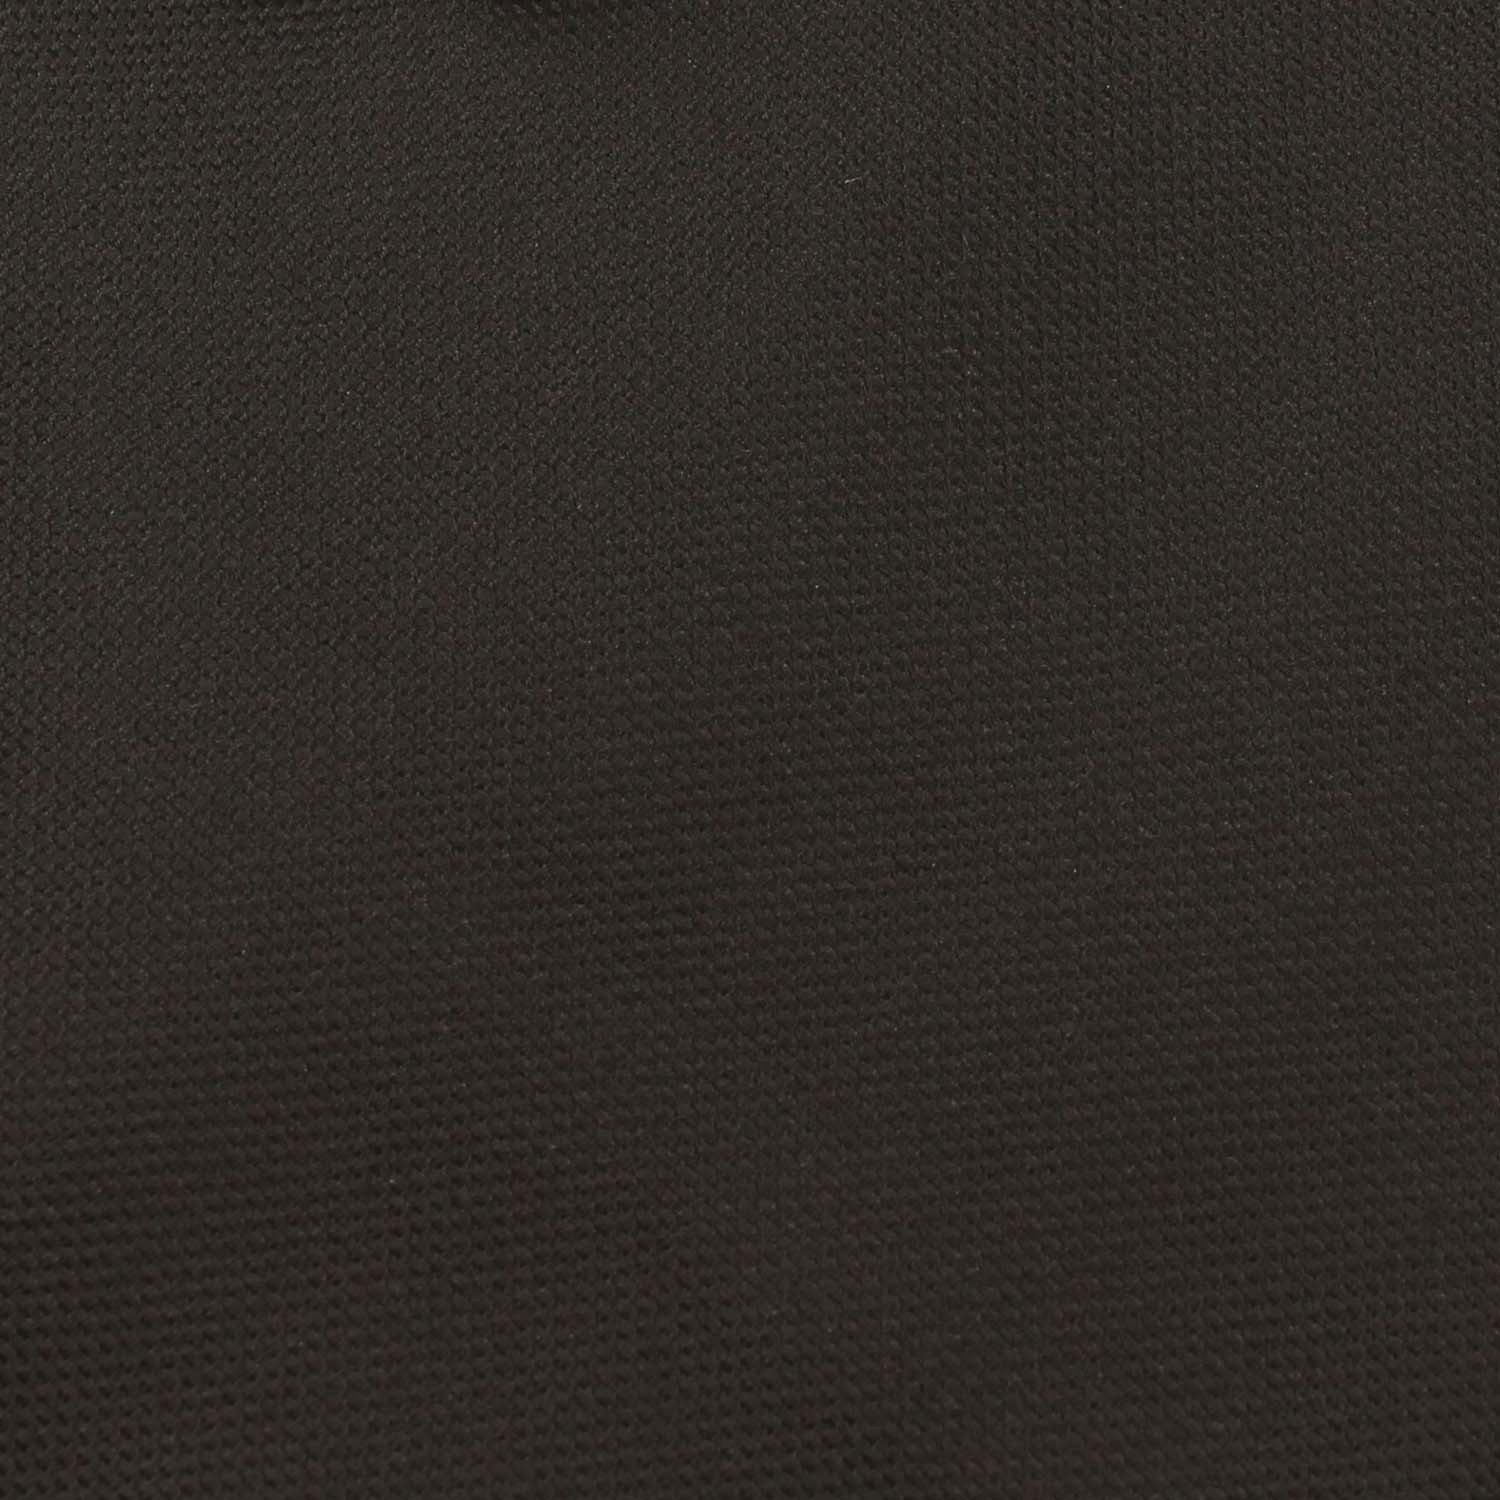 Black OTAA Fabric Skinny Tie X260